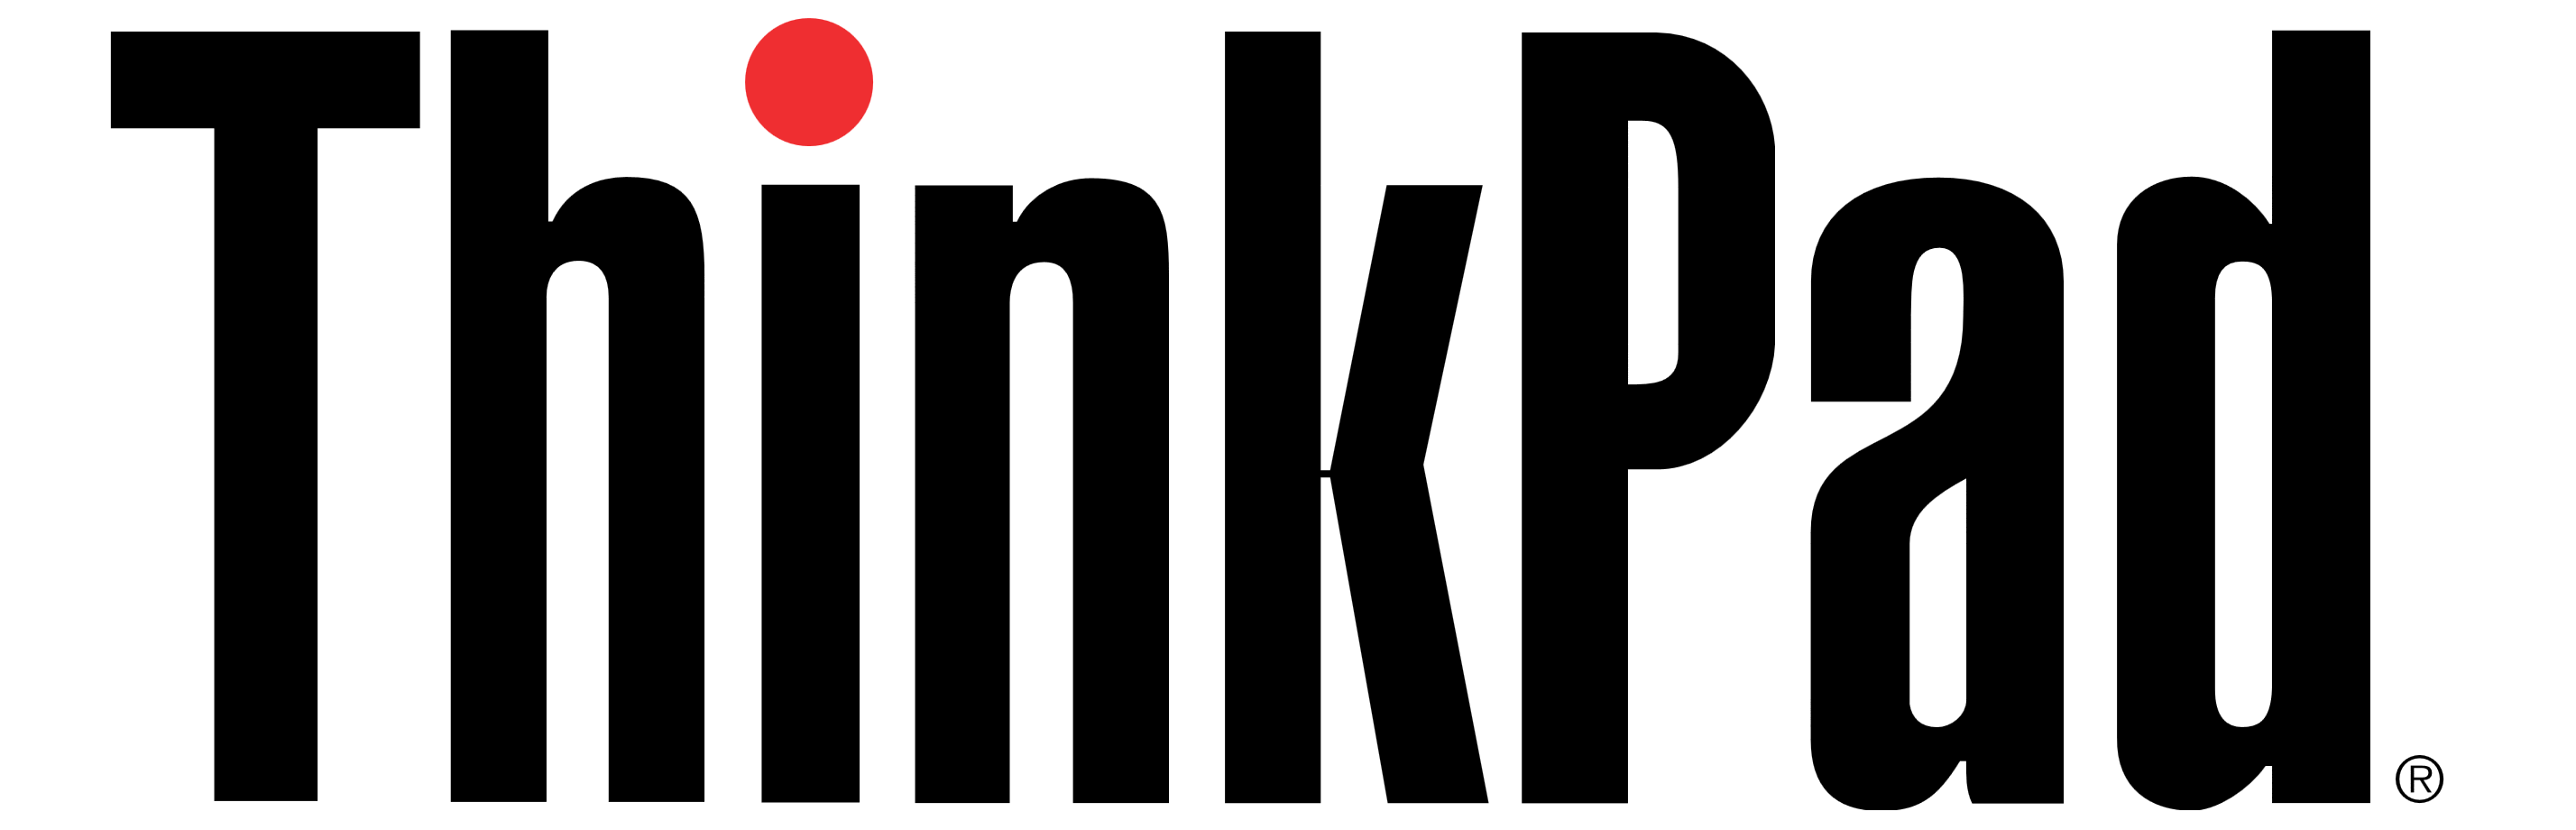 ThinkPad_logo_logo.png